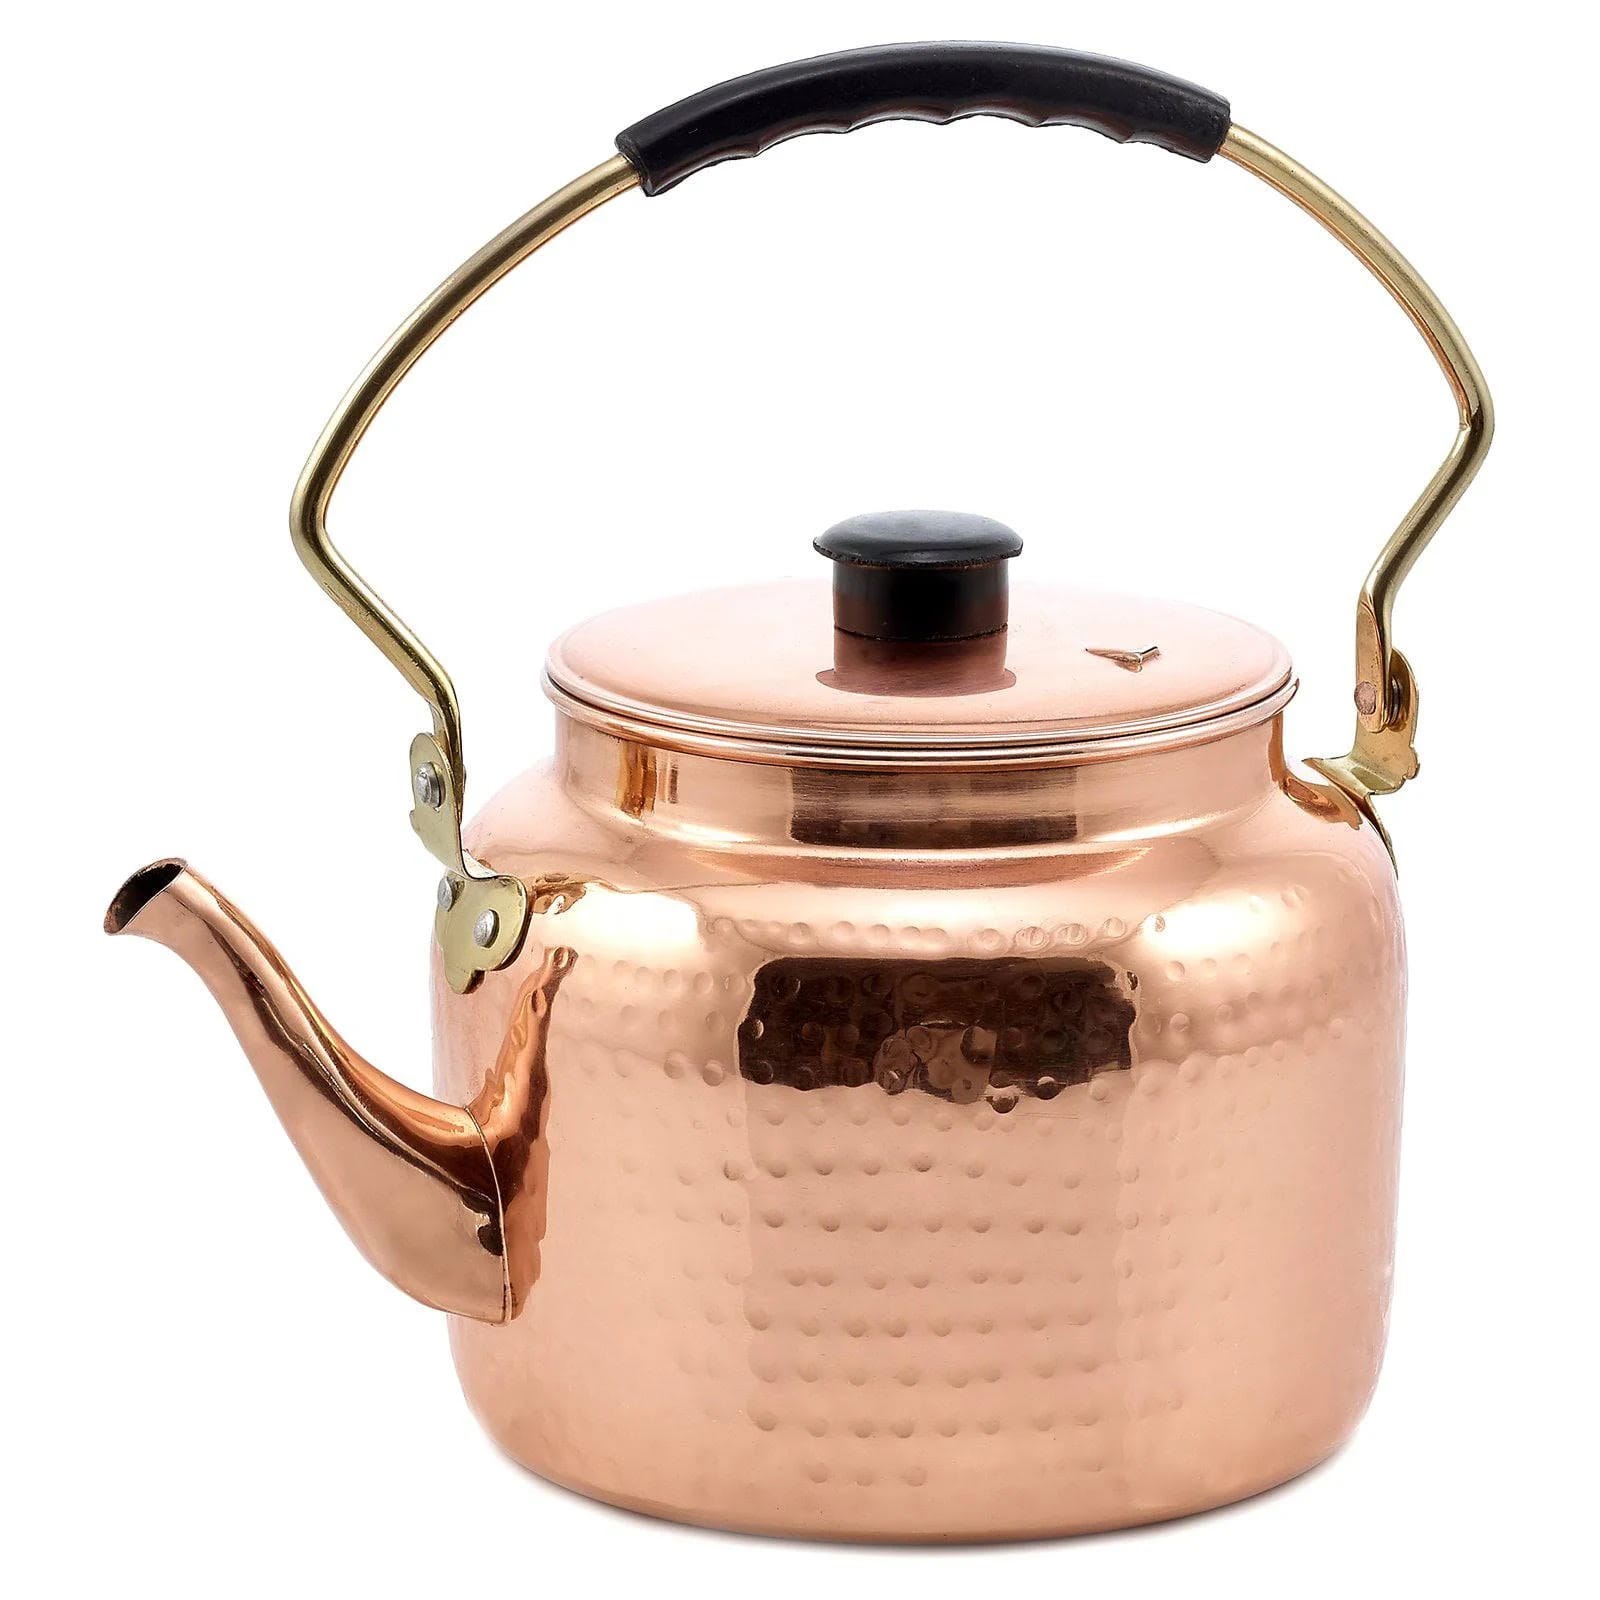 Elegant copper tea kettle for coffee or tea | Image